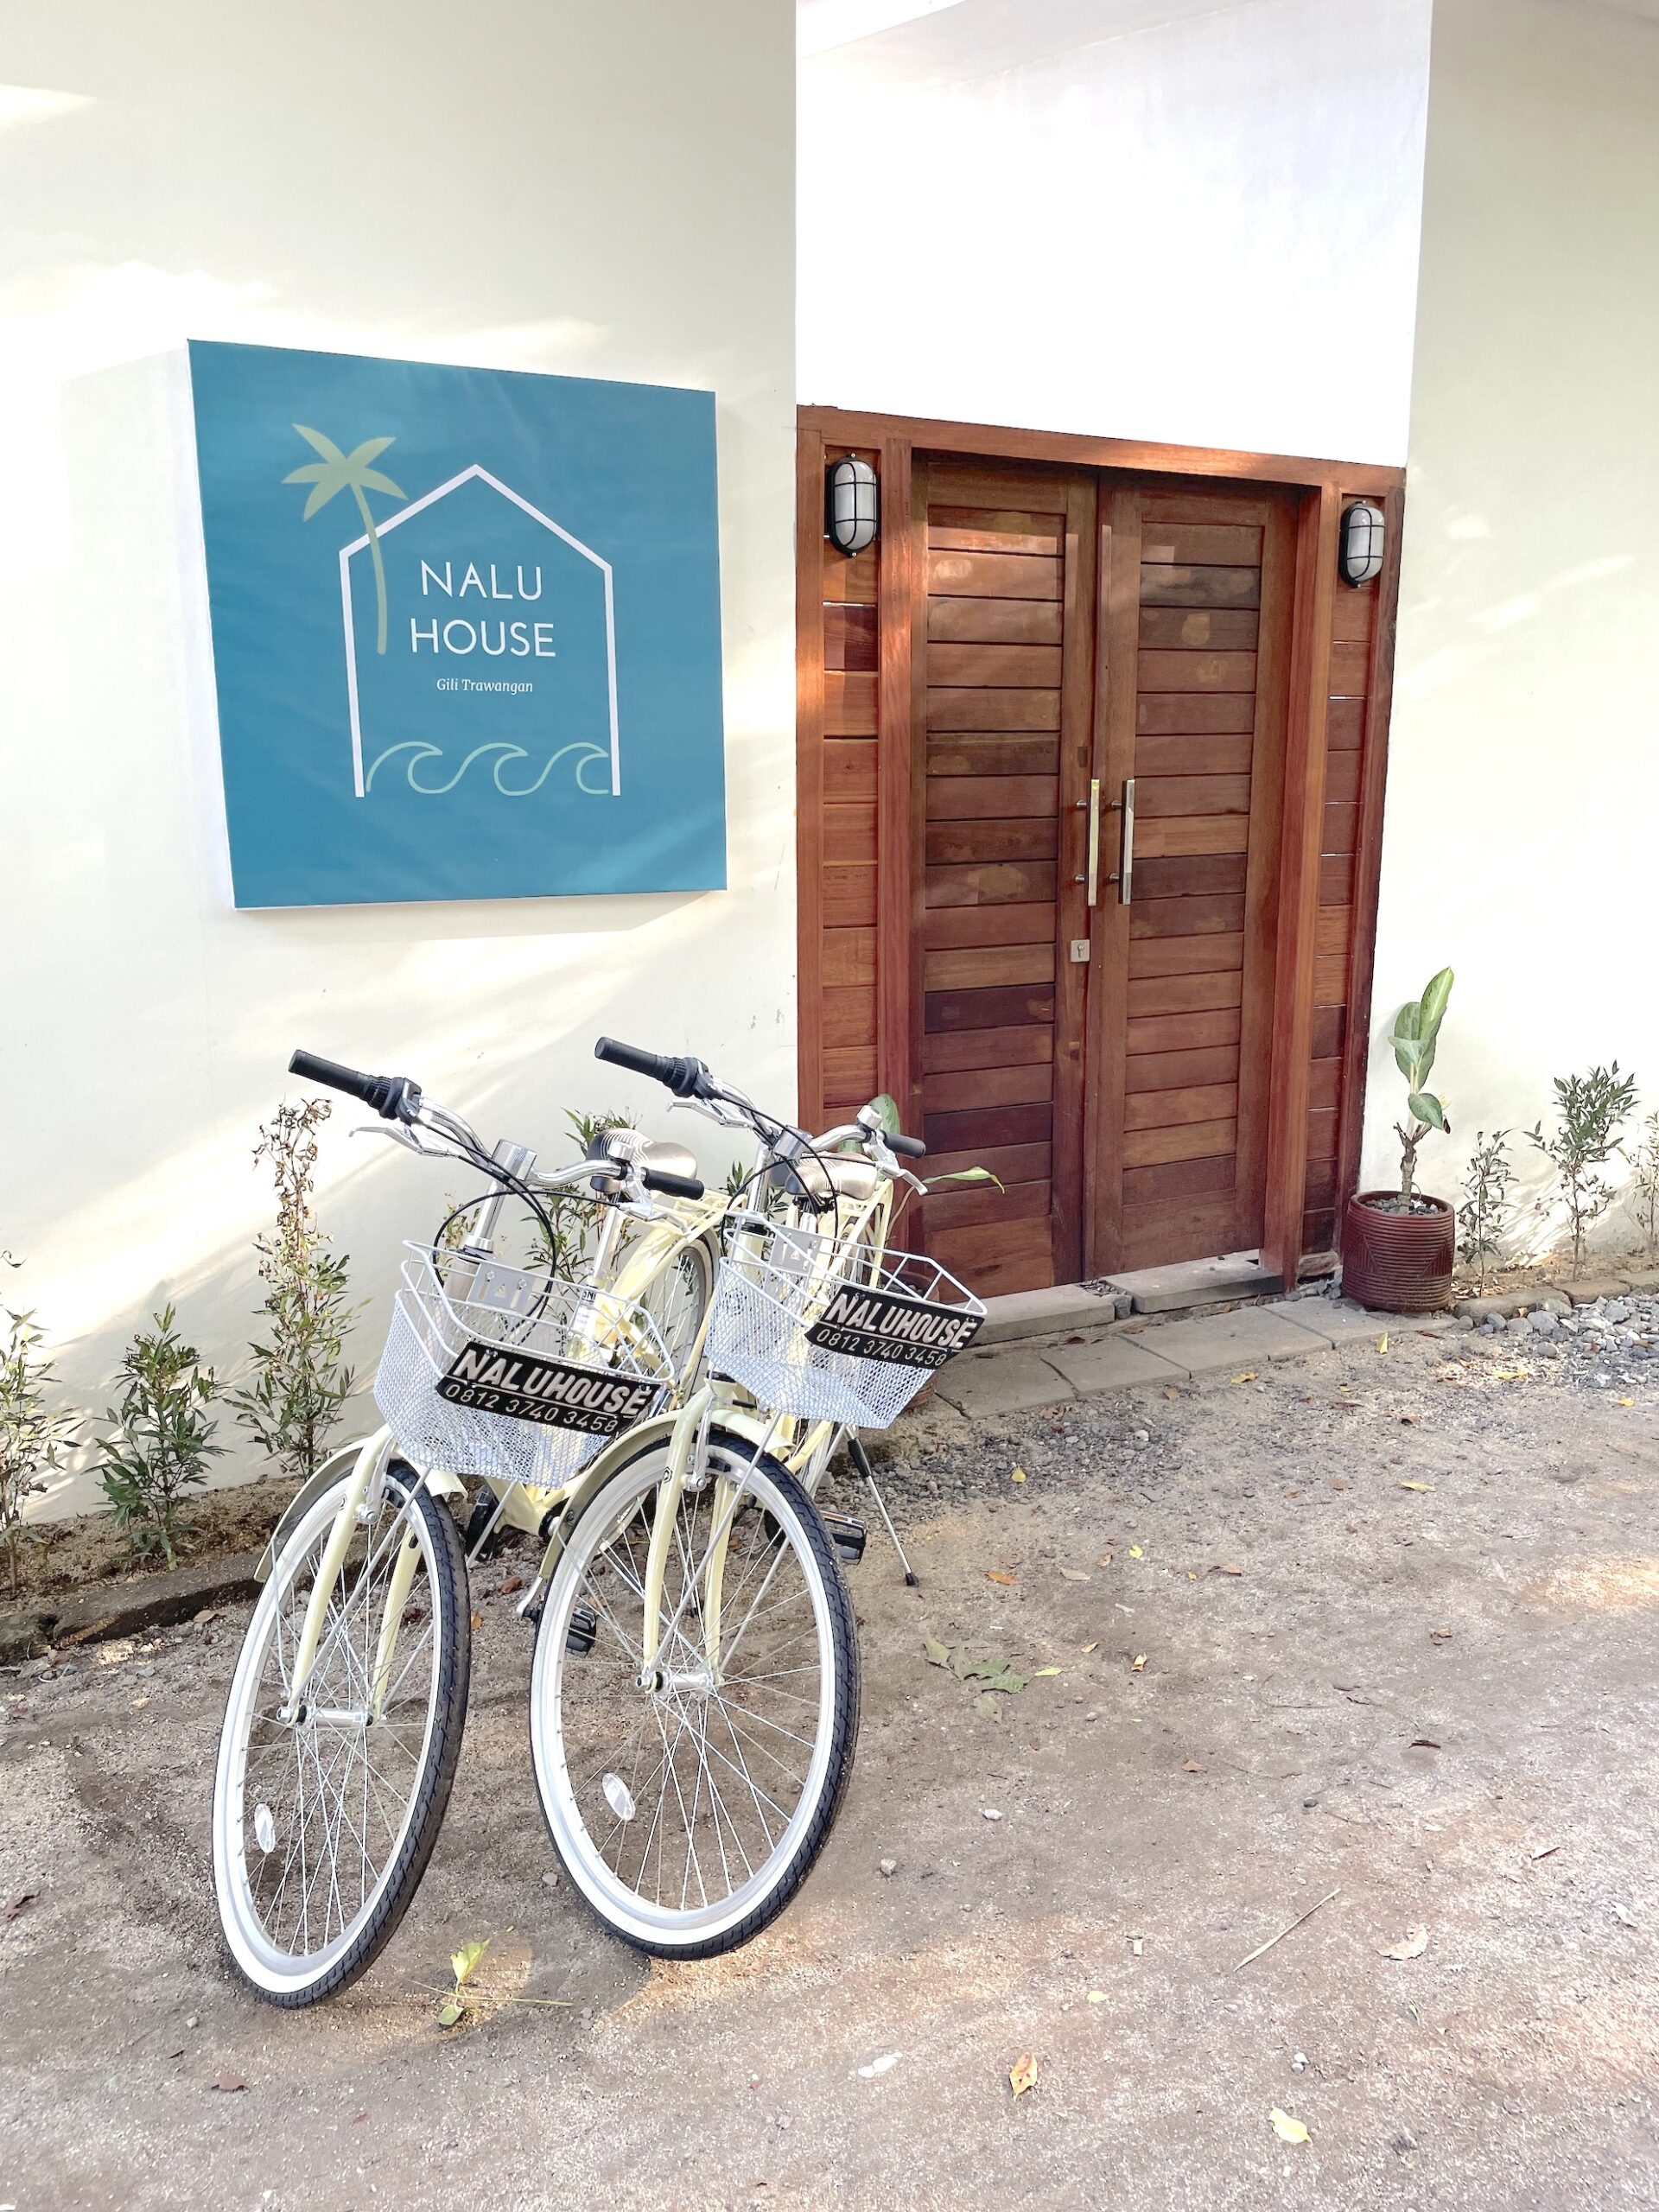 bikes are free to use - lets explore Gili trawangan